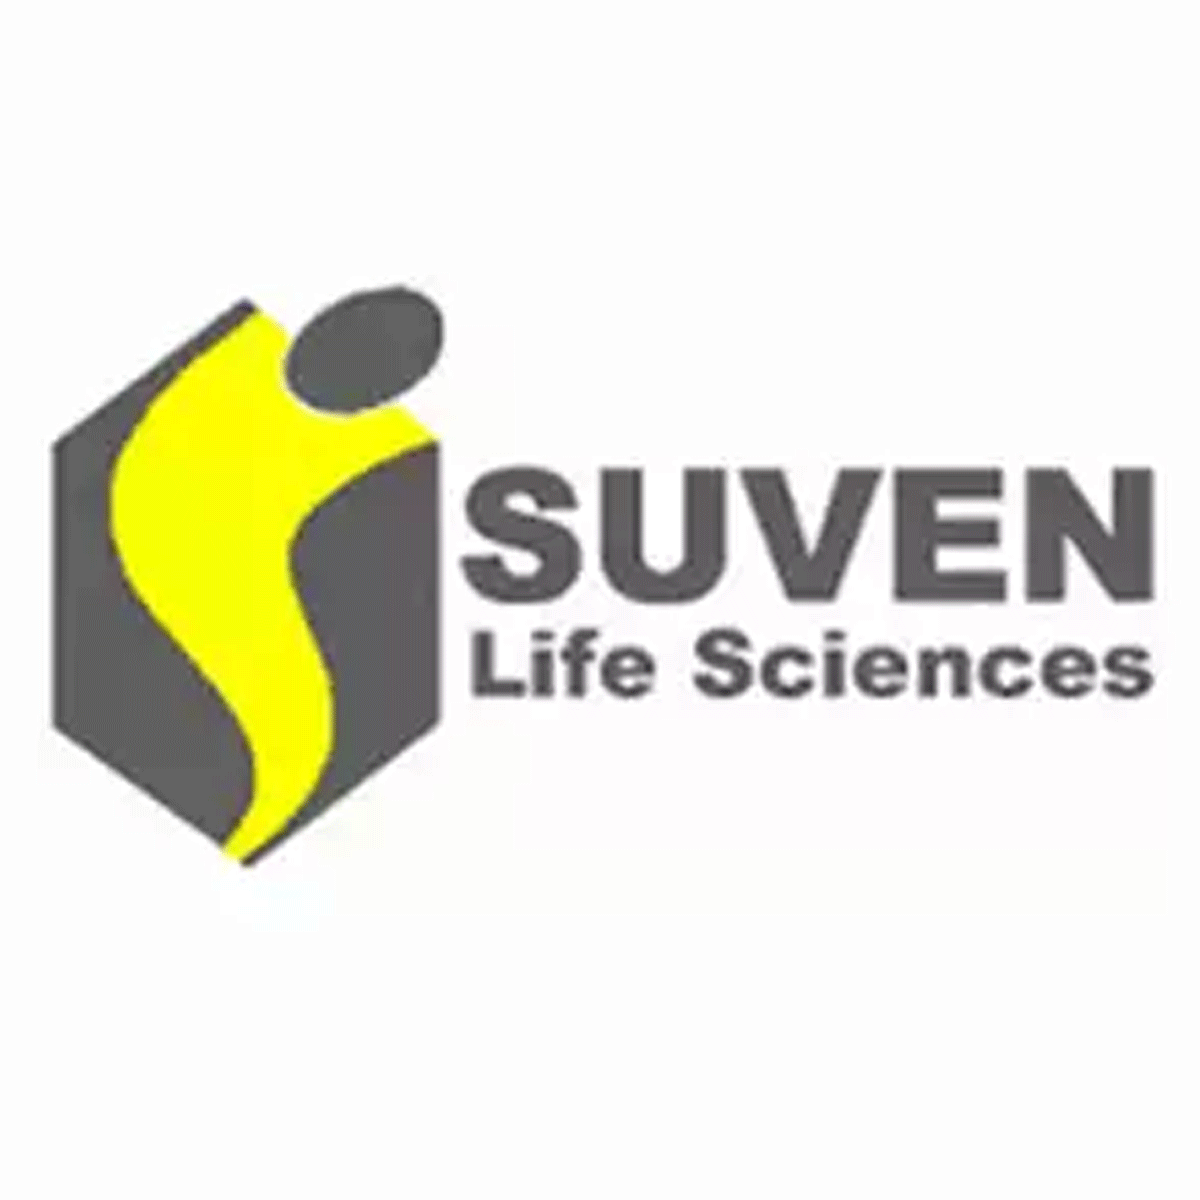 Life Sciences Brand - BYU Life Sciences